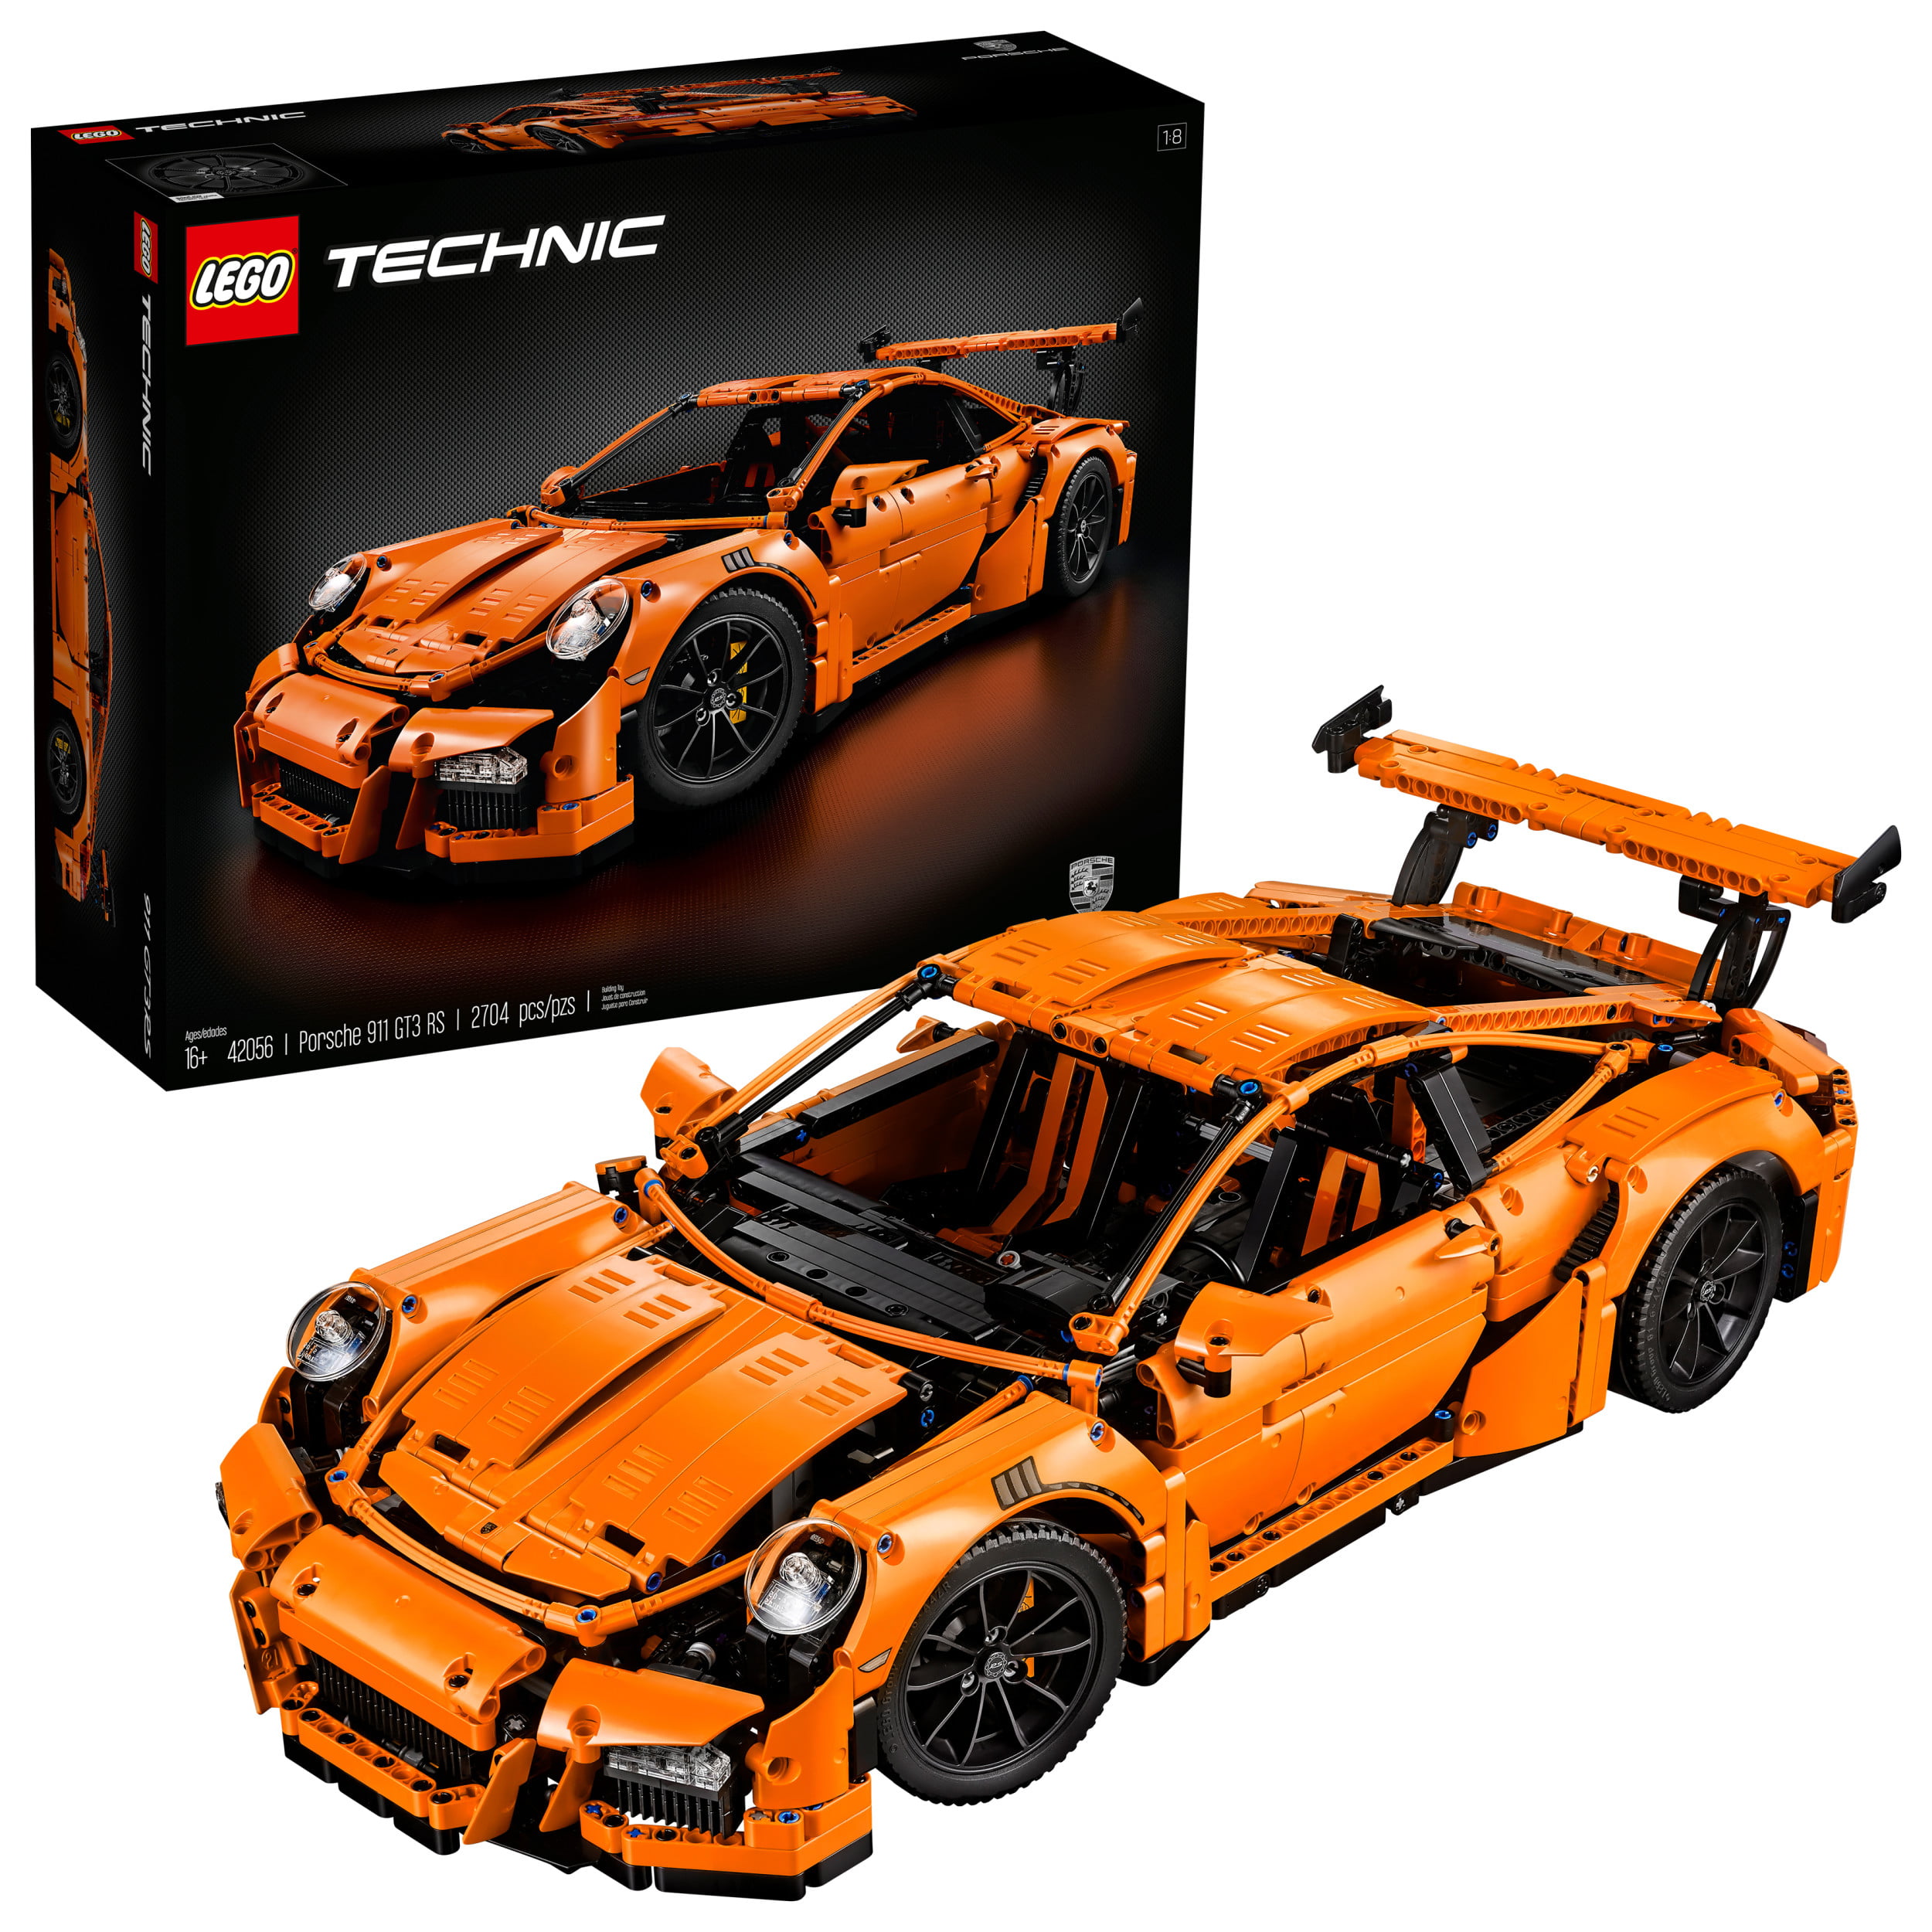 Lego Technic Porsche 911 Gt3 Rs 42056 2704 Pieces Walmartcom